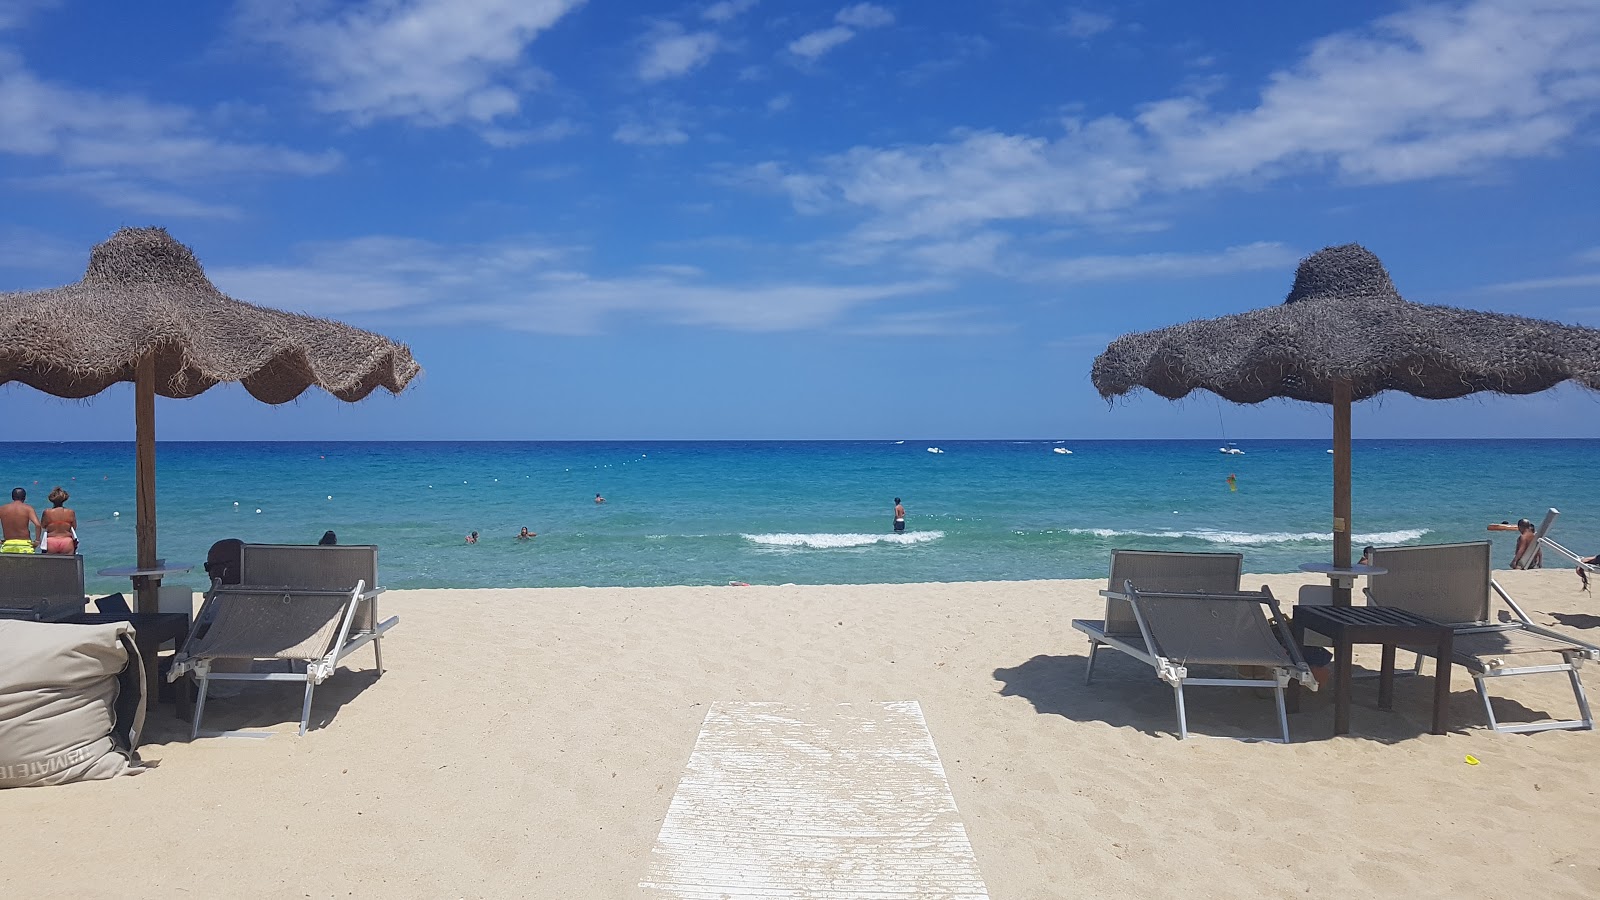 Foto de Spiaggia di Cala Sinzias - lugar popular entre os apreciadores de relaxamento